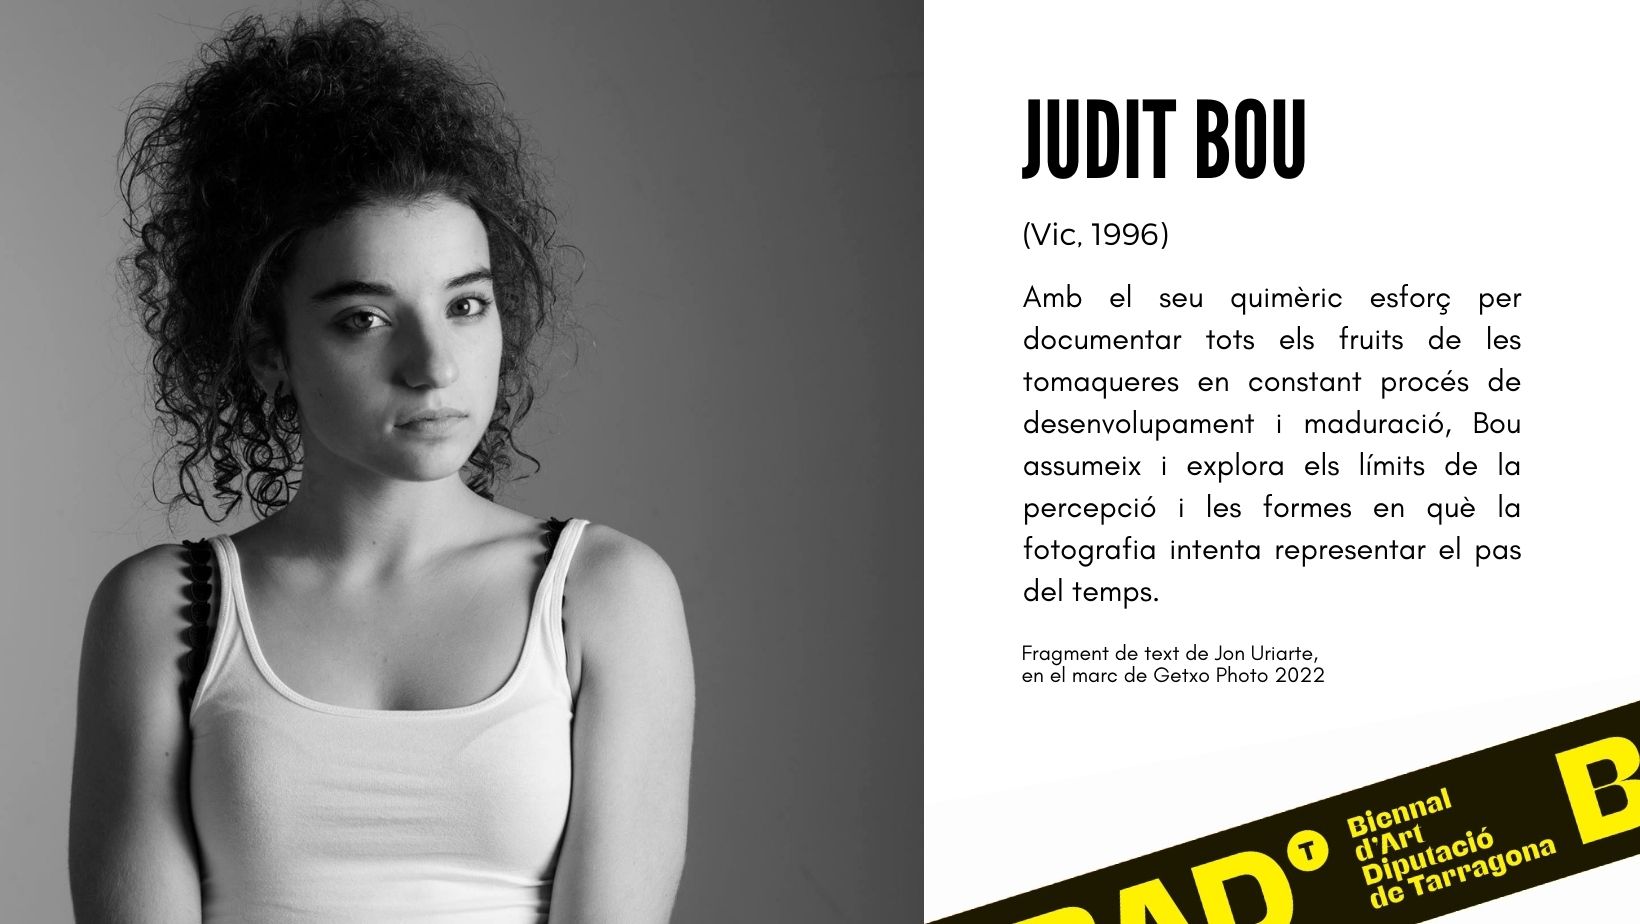 Judit Bou